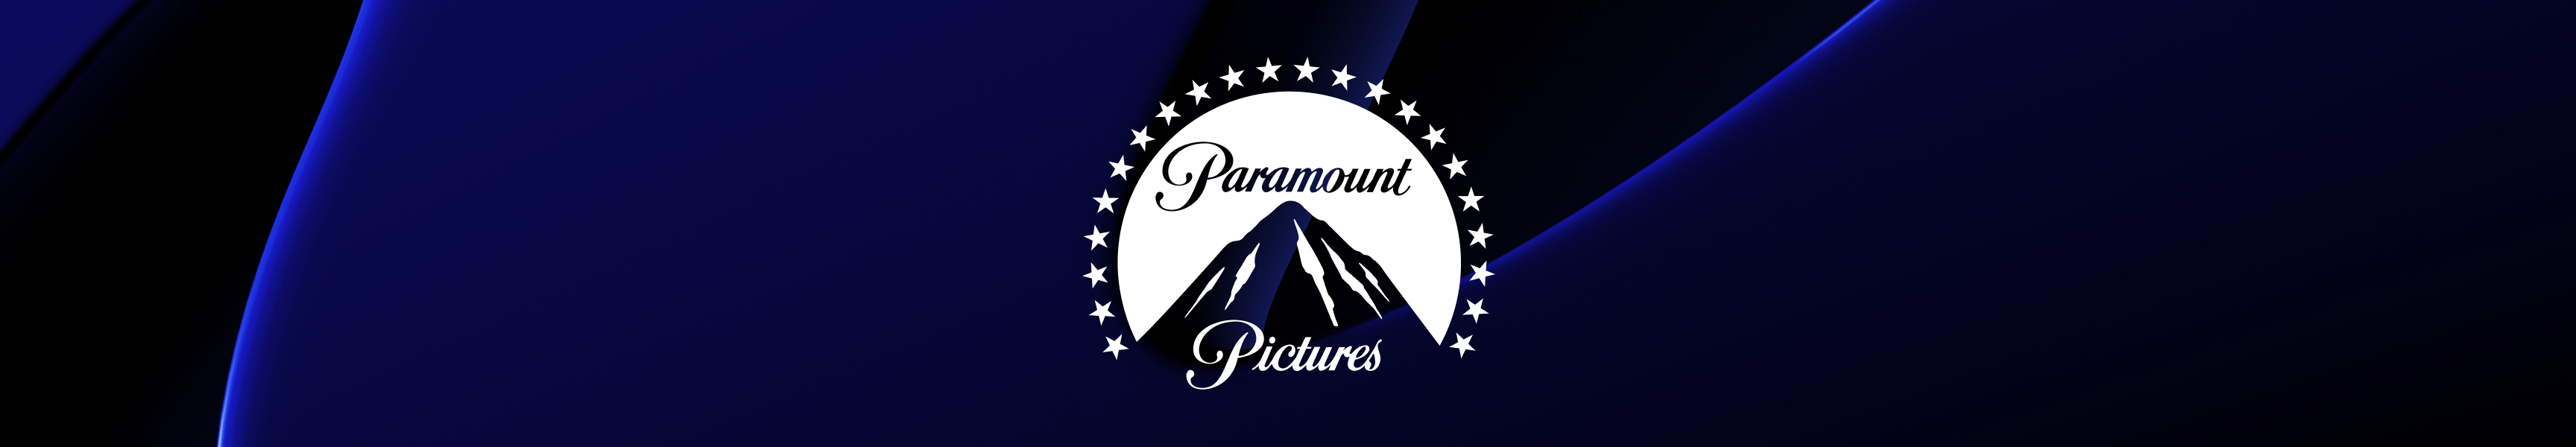 Paramount Pictures Accesorios